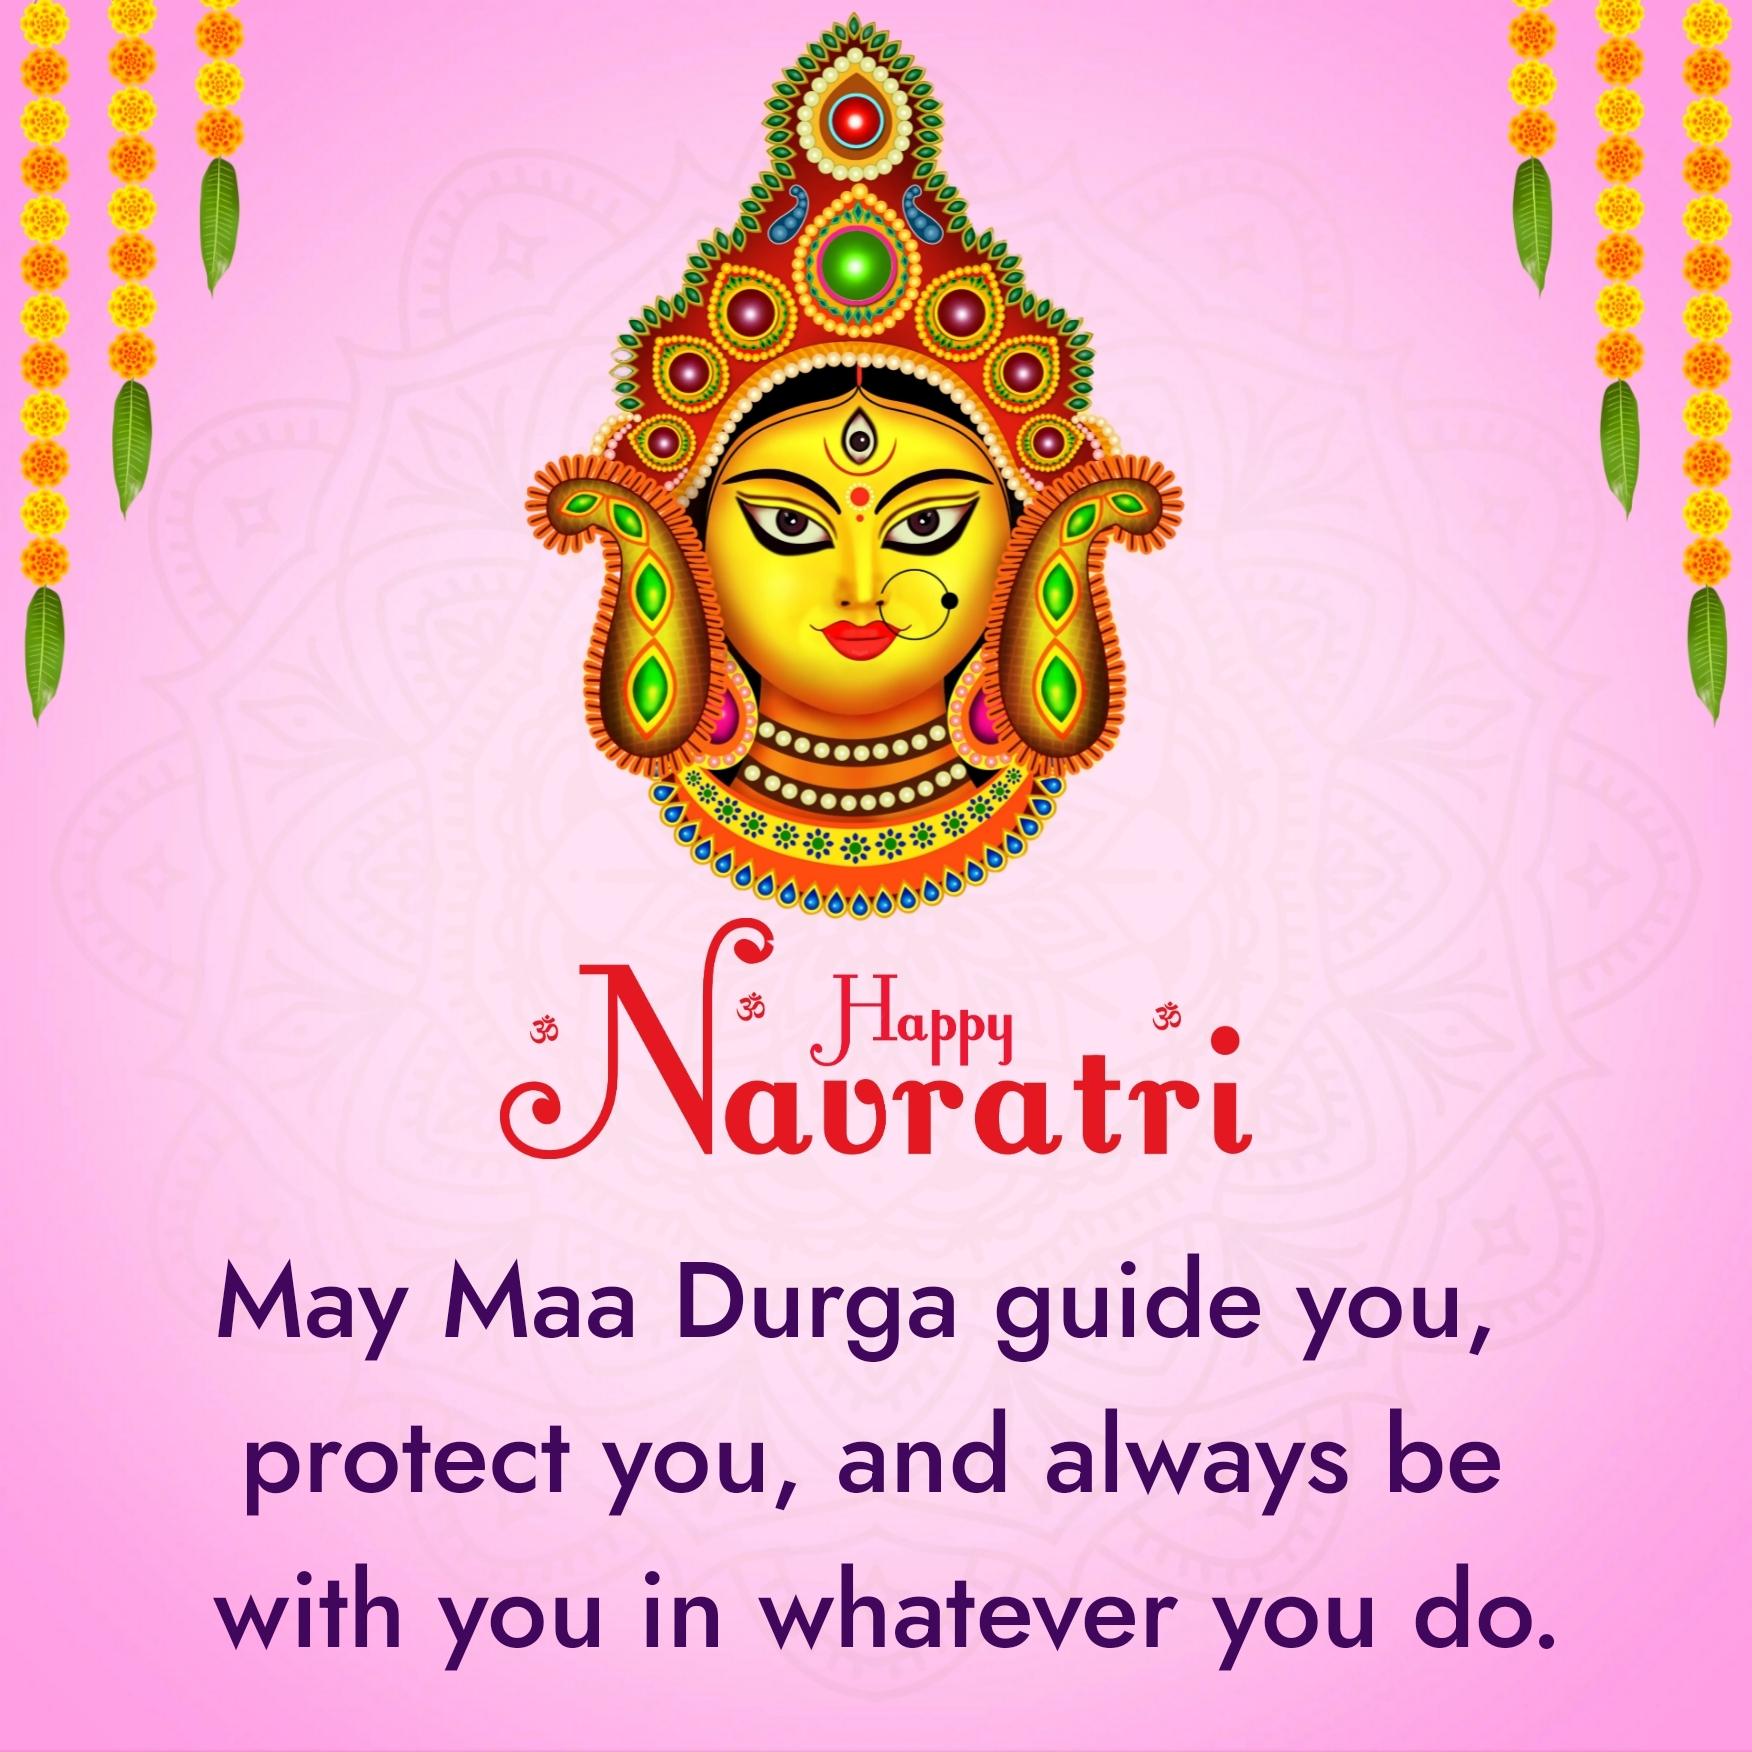 May Maa Durga guide you protect you